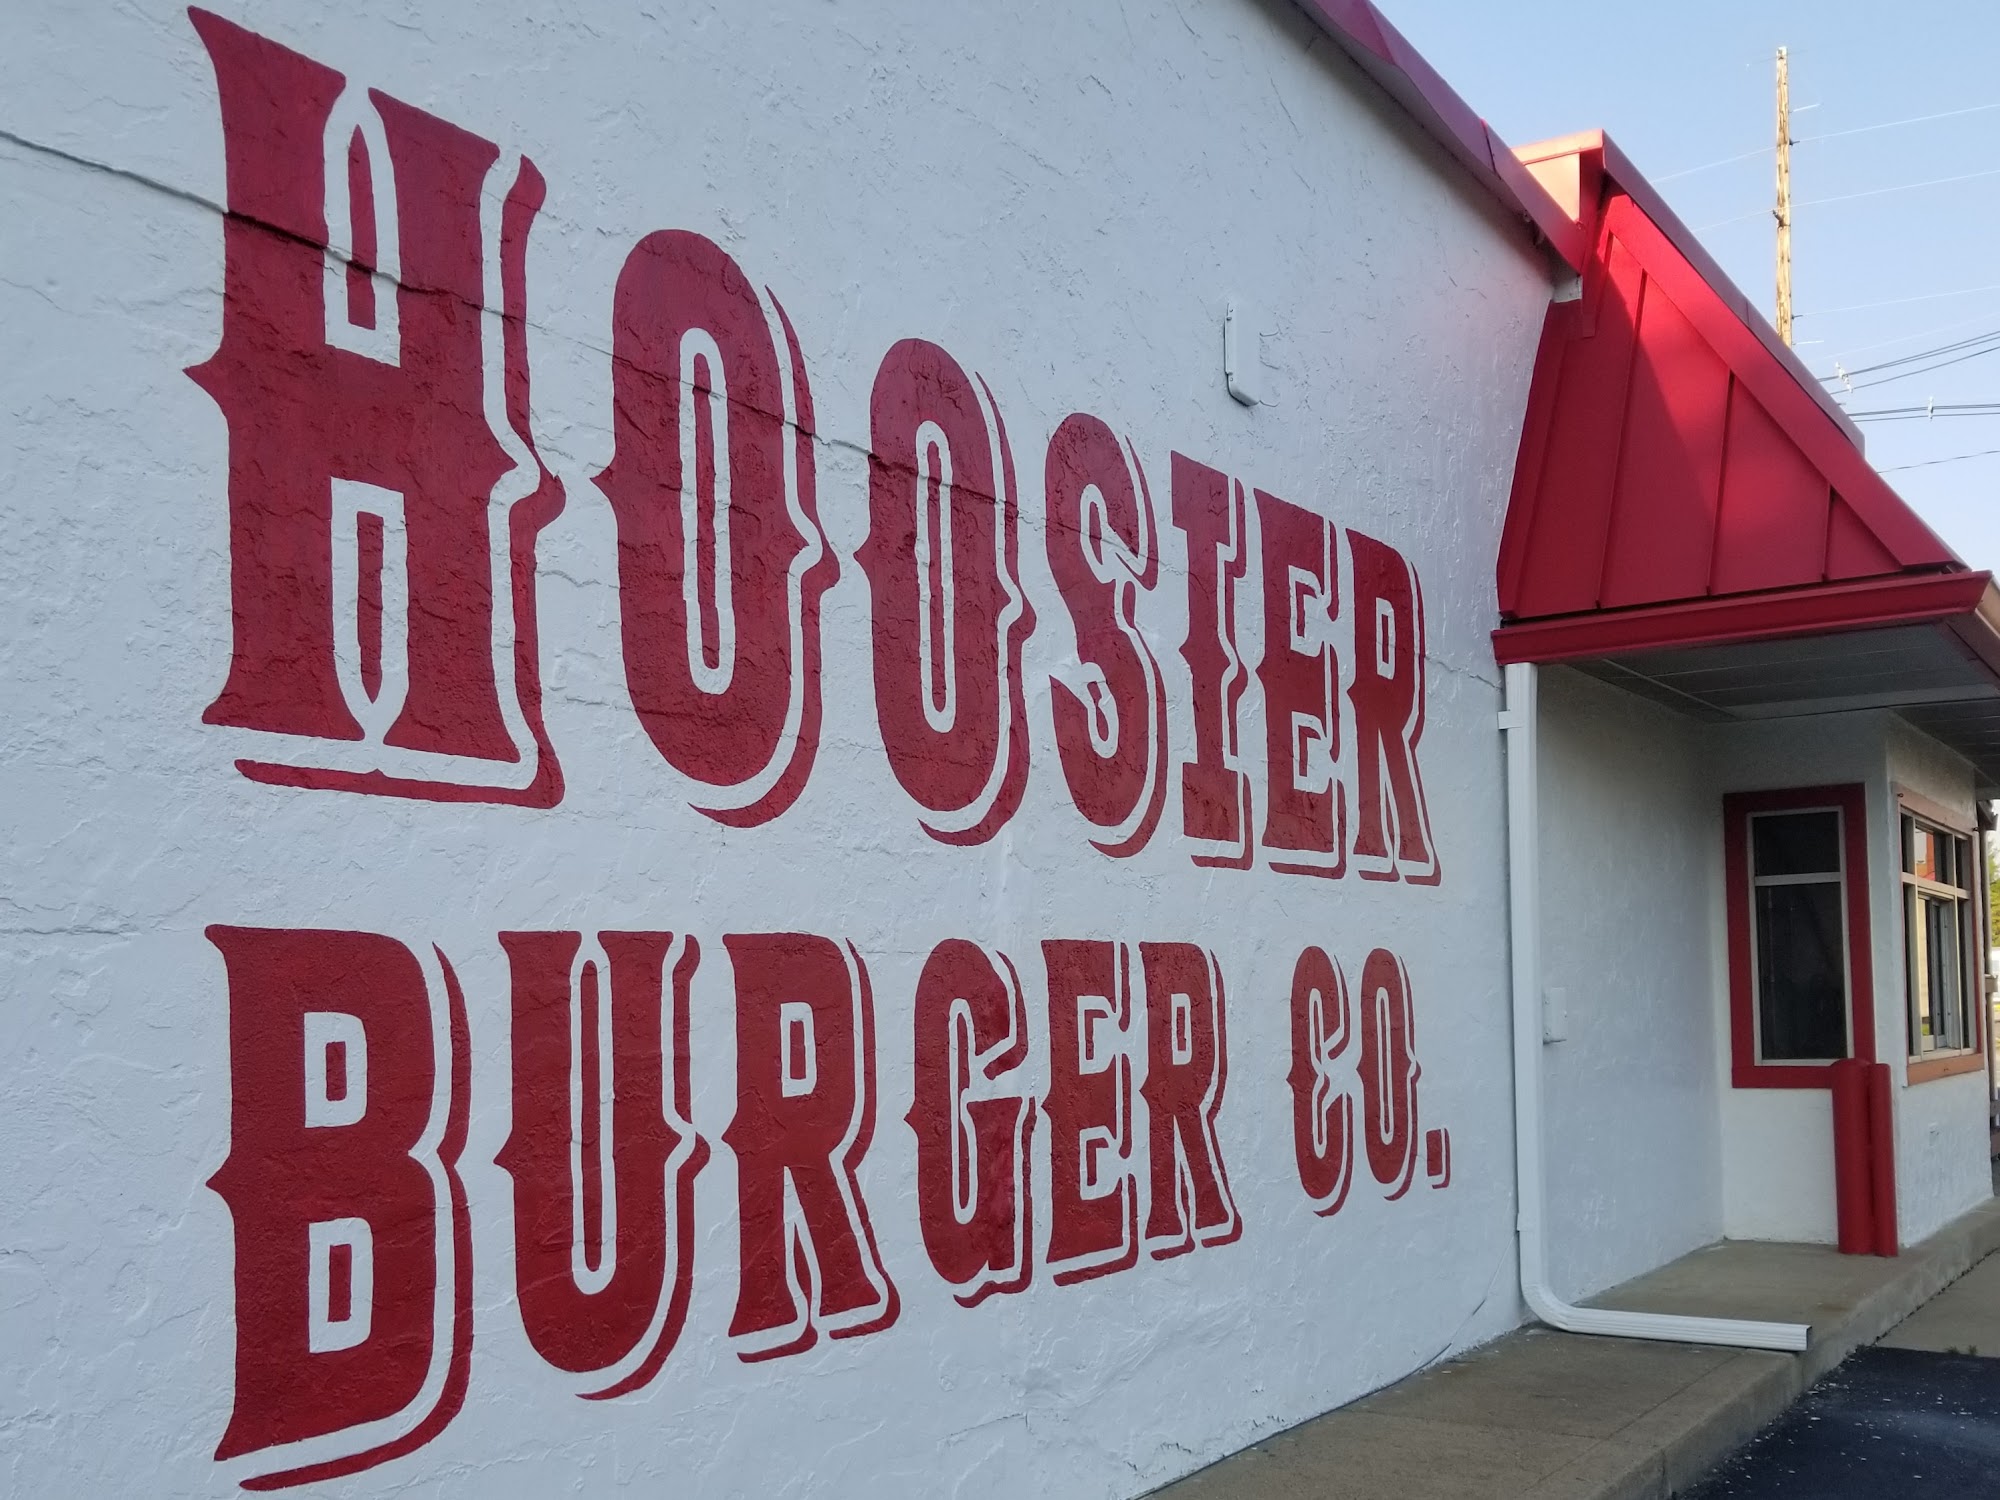 Hoosier Burger Co.